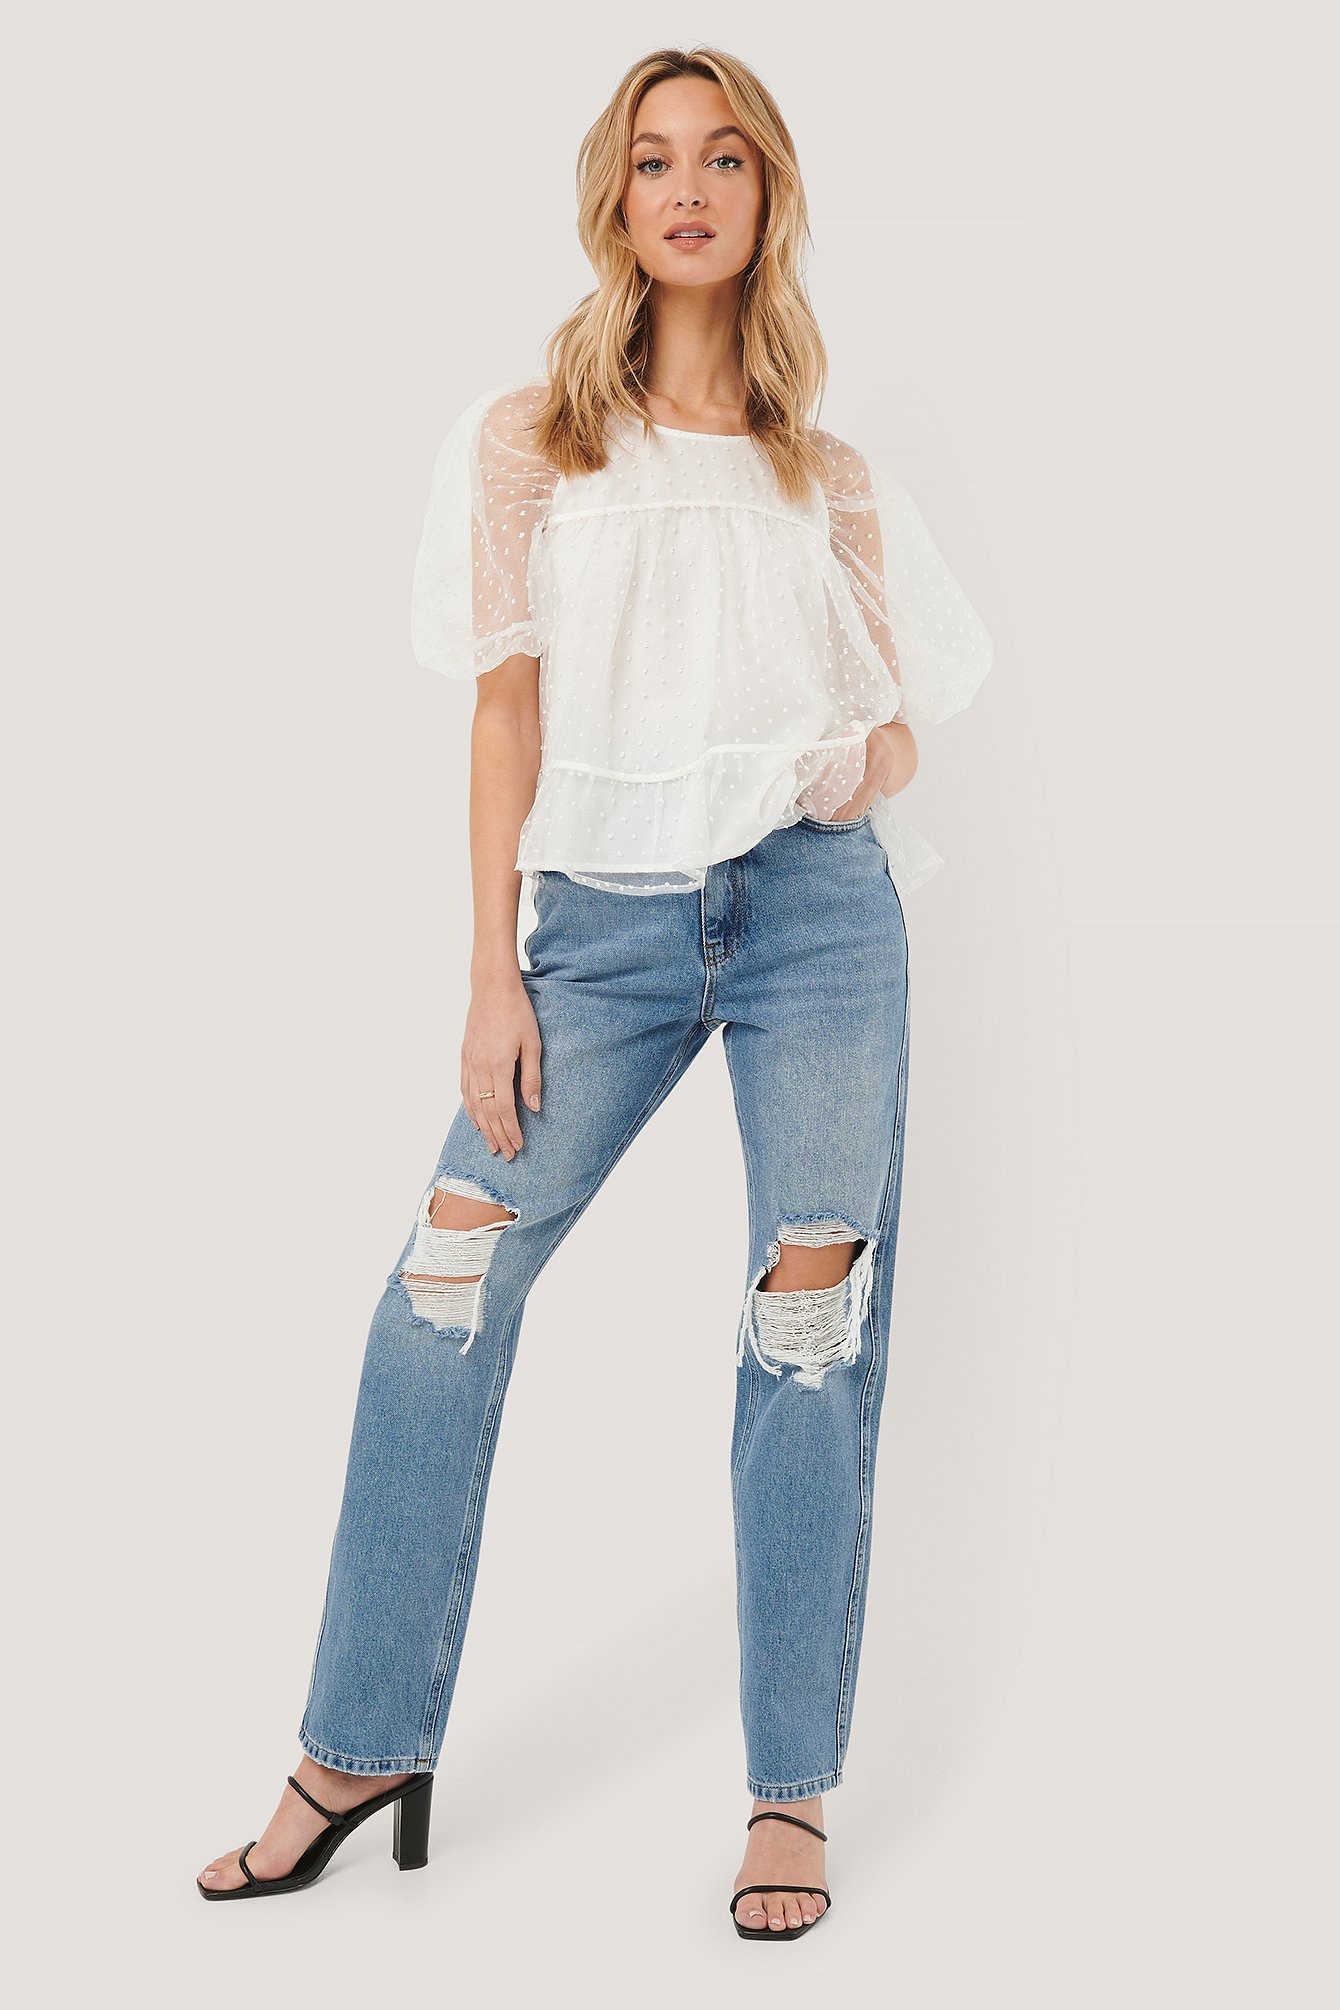 Damen Bekleidung Oberteile Langarm Oberteile NA-KD Synthetik Trend Distressed Straight Fit Jeans in Natur 